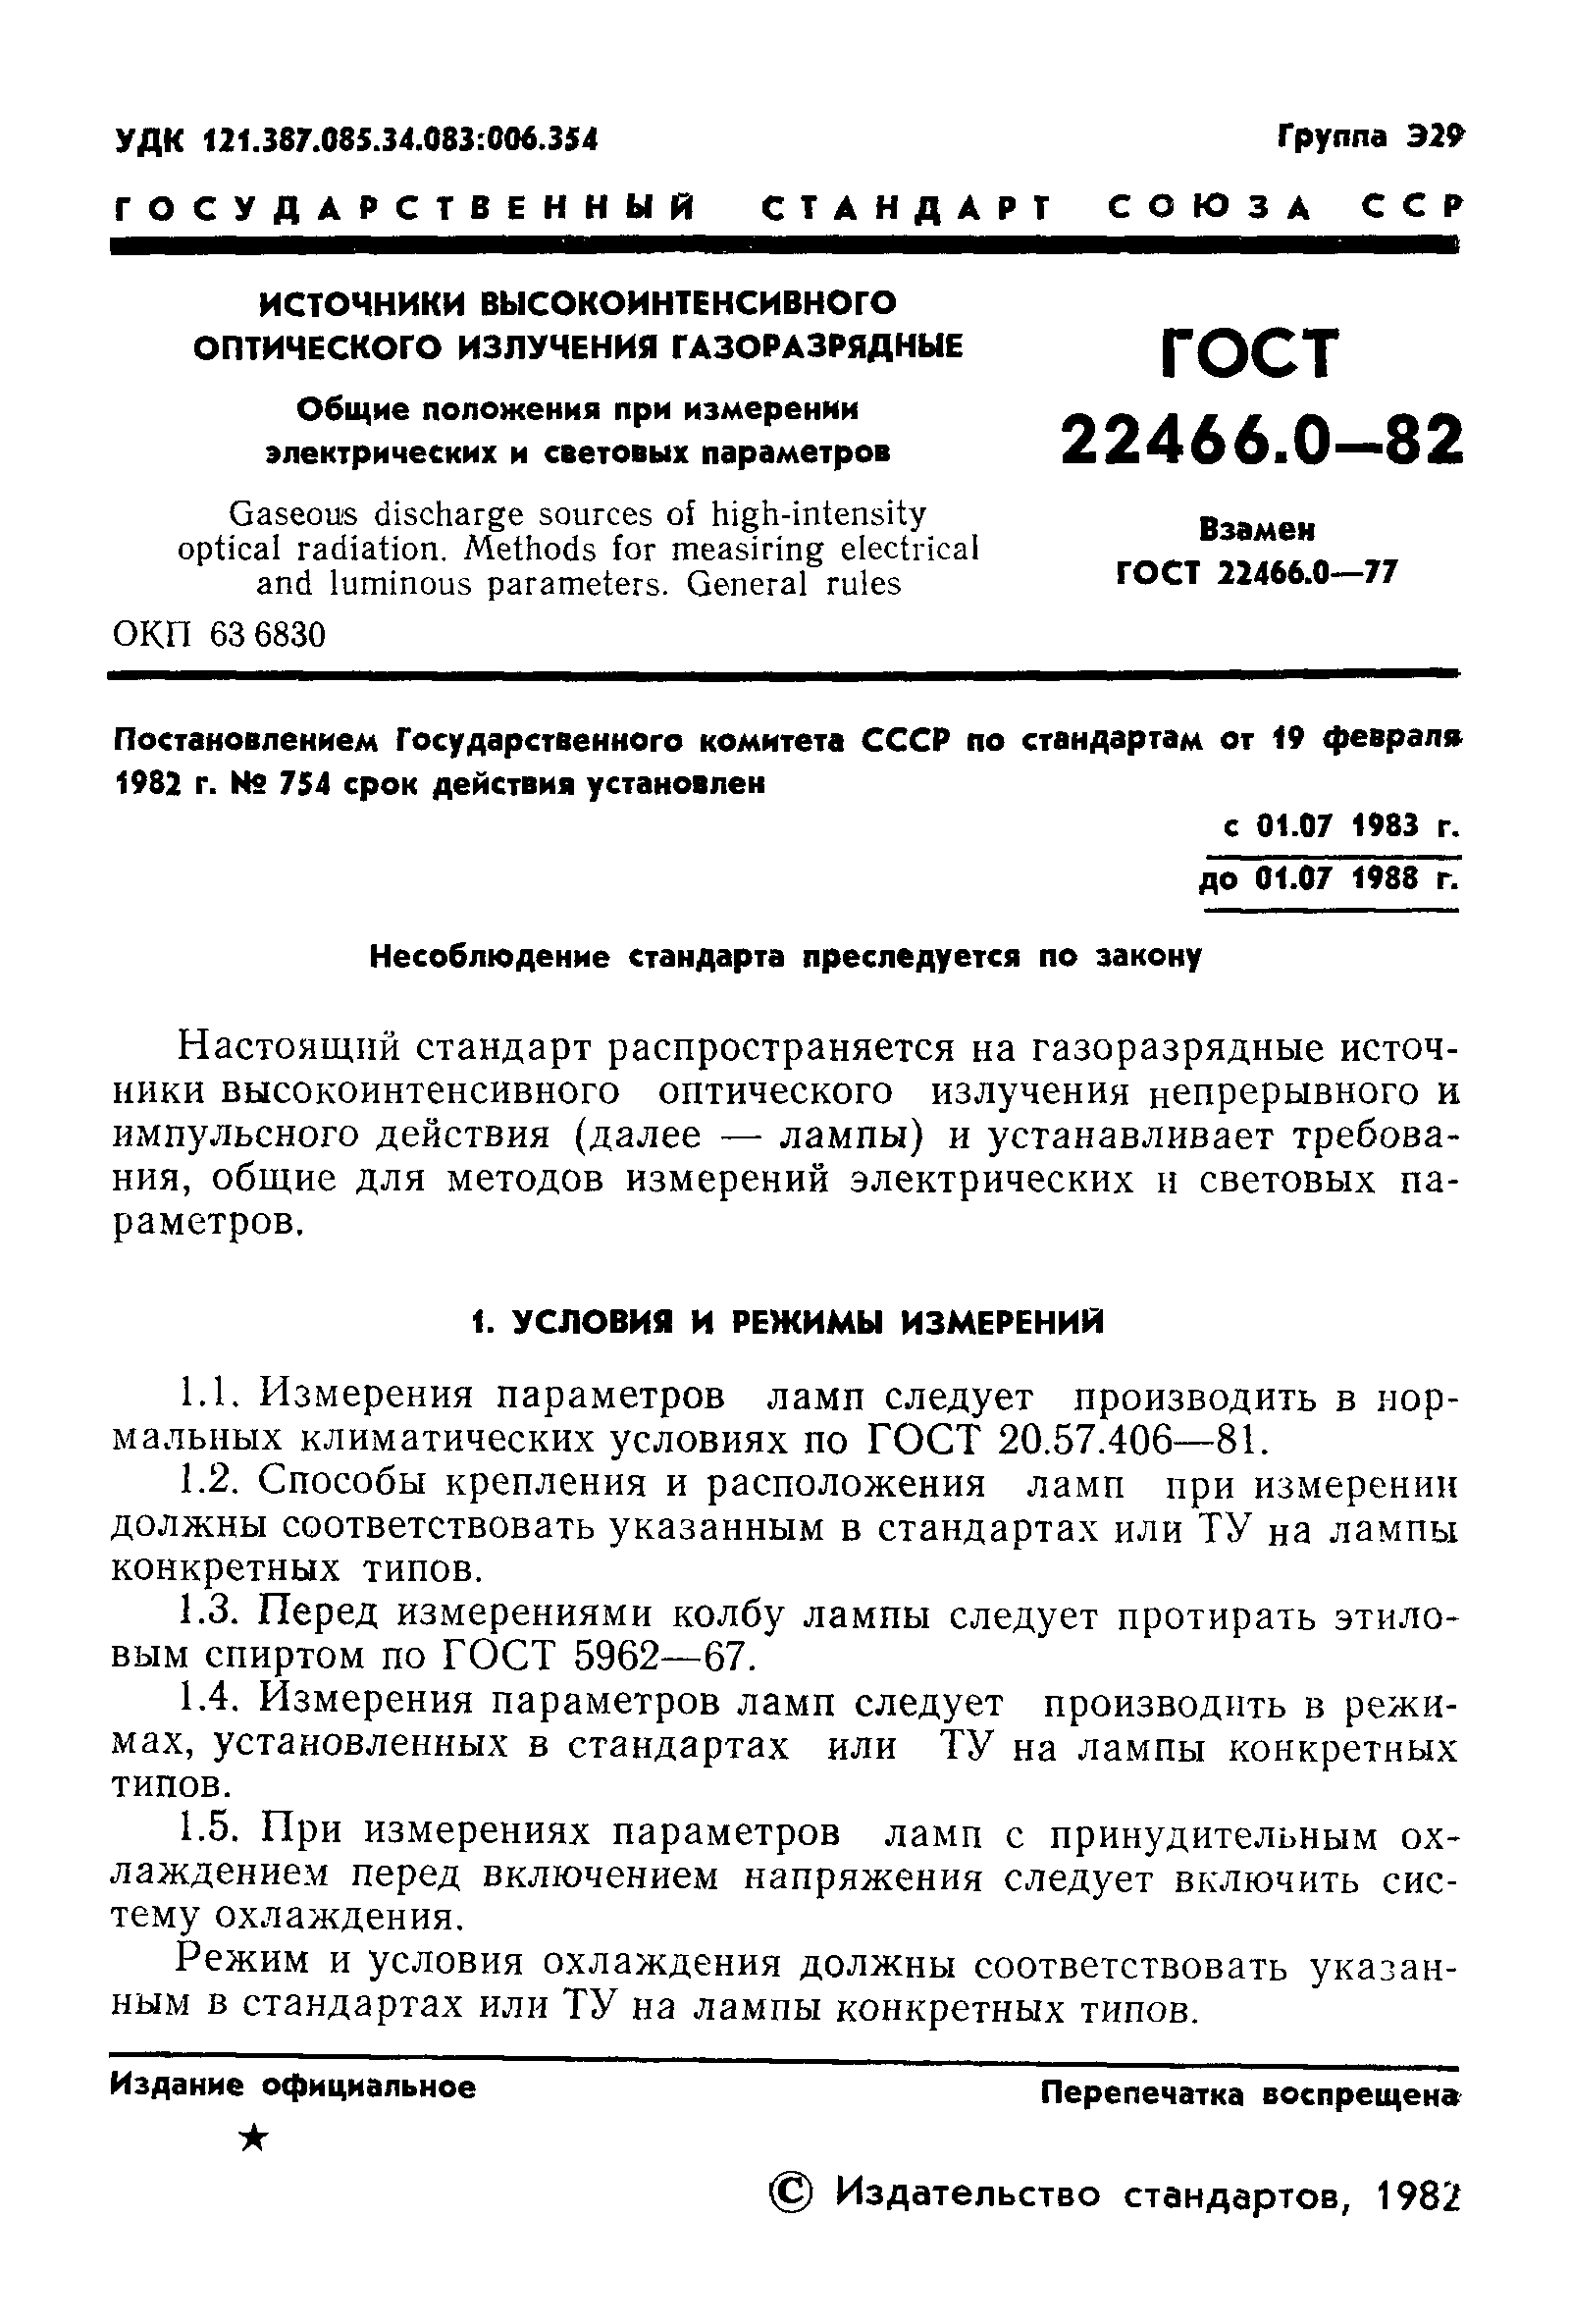 ГОСТ 22466.0-82